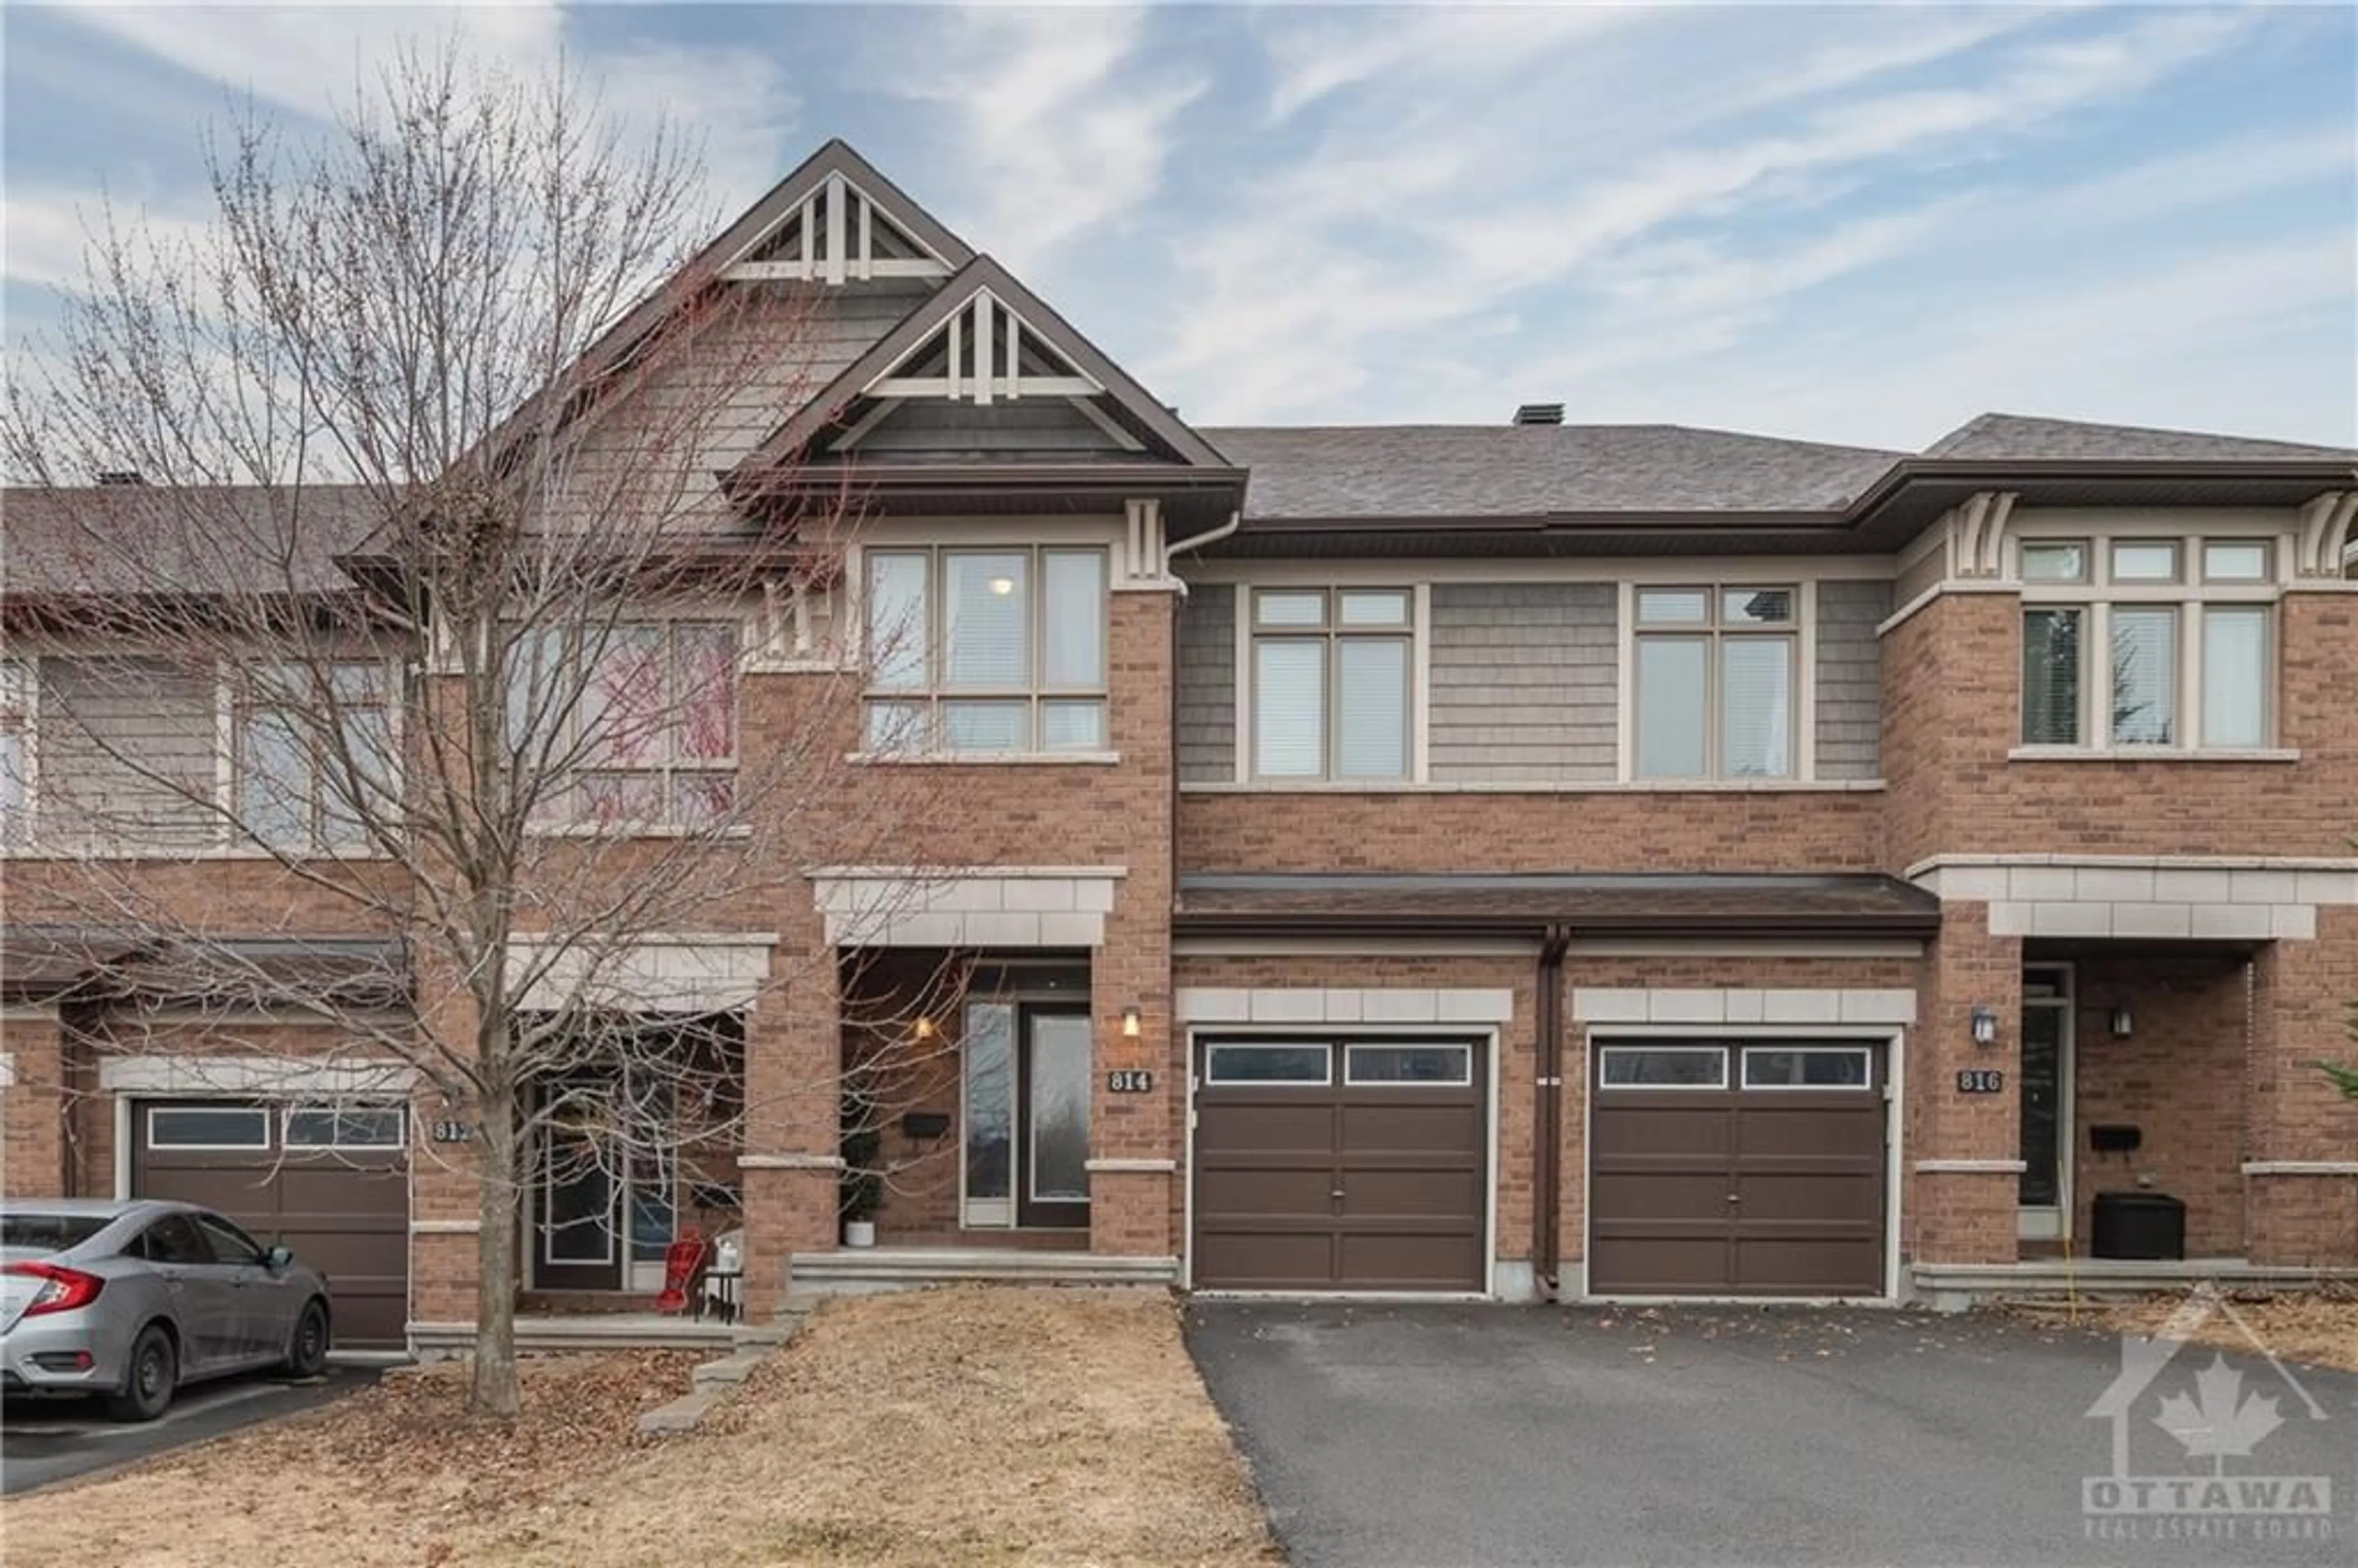 Home with brick exterior material for 814 FLETCHER Cir, Ottawa Ontario K2T 0B6